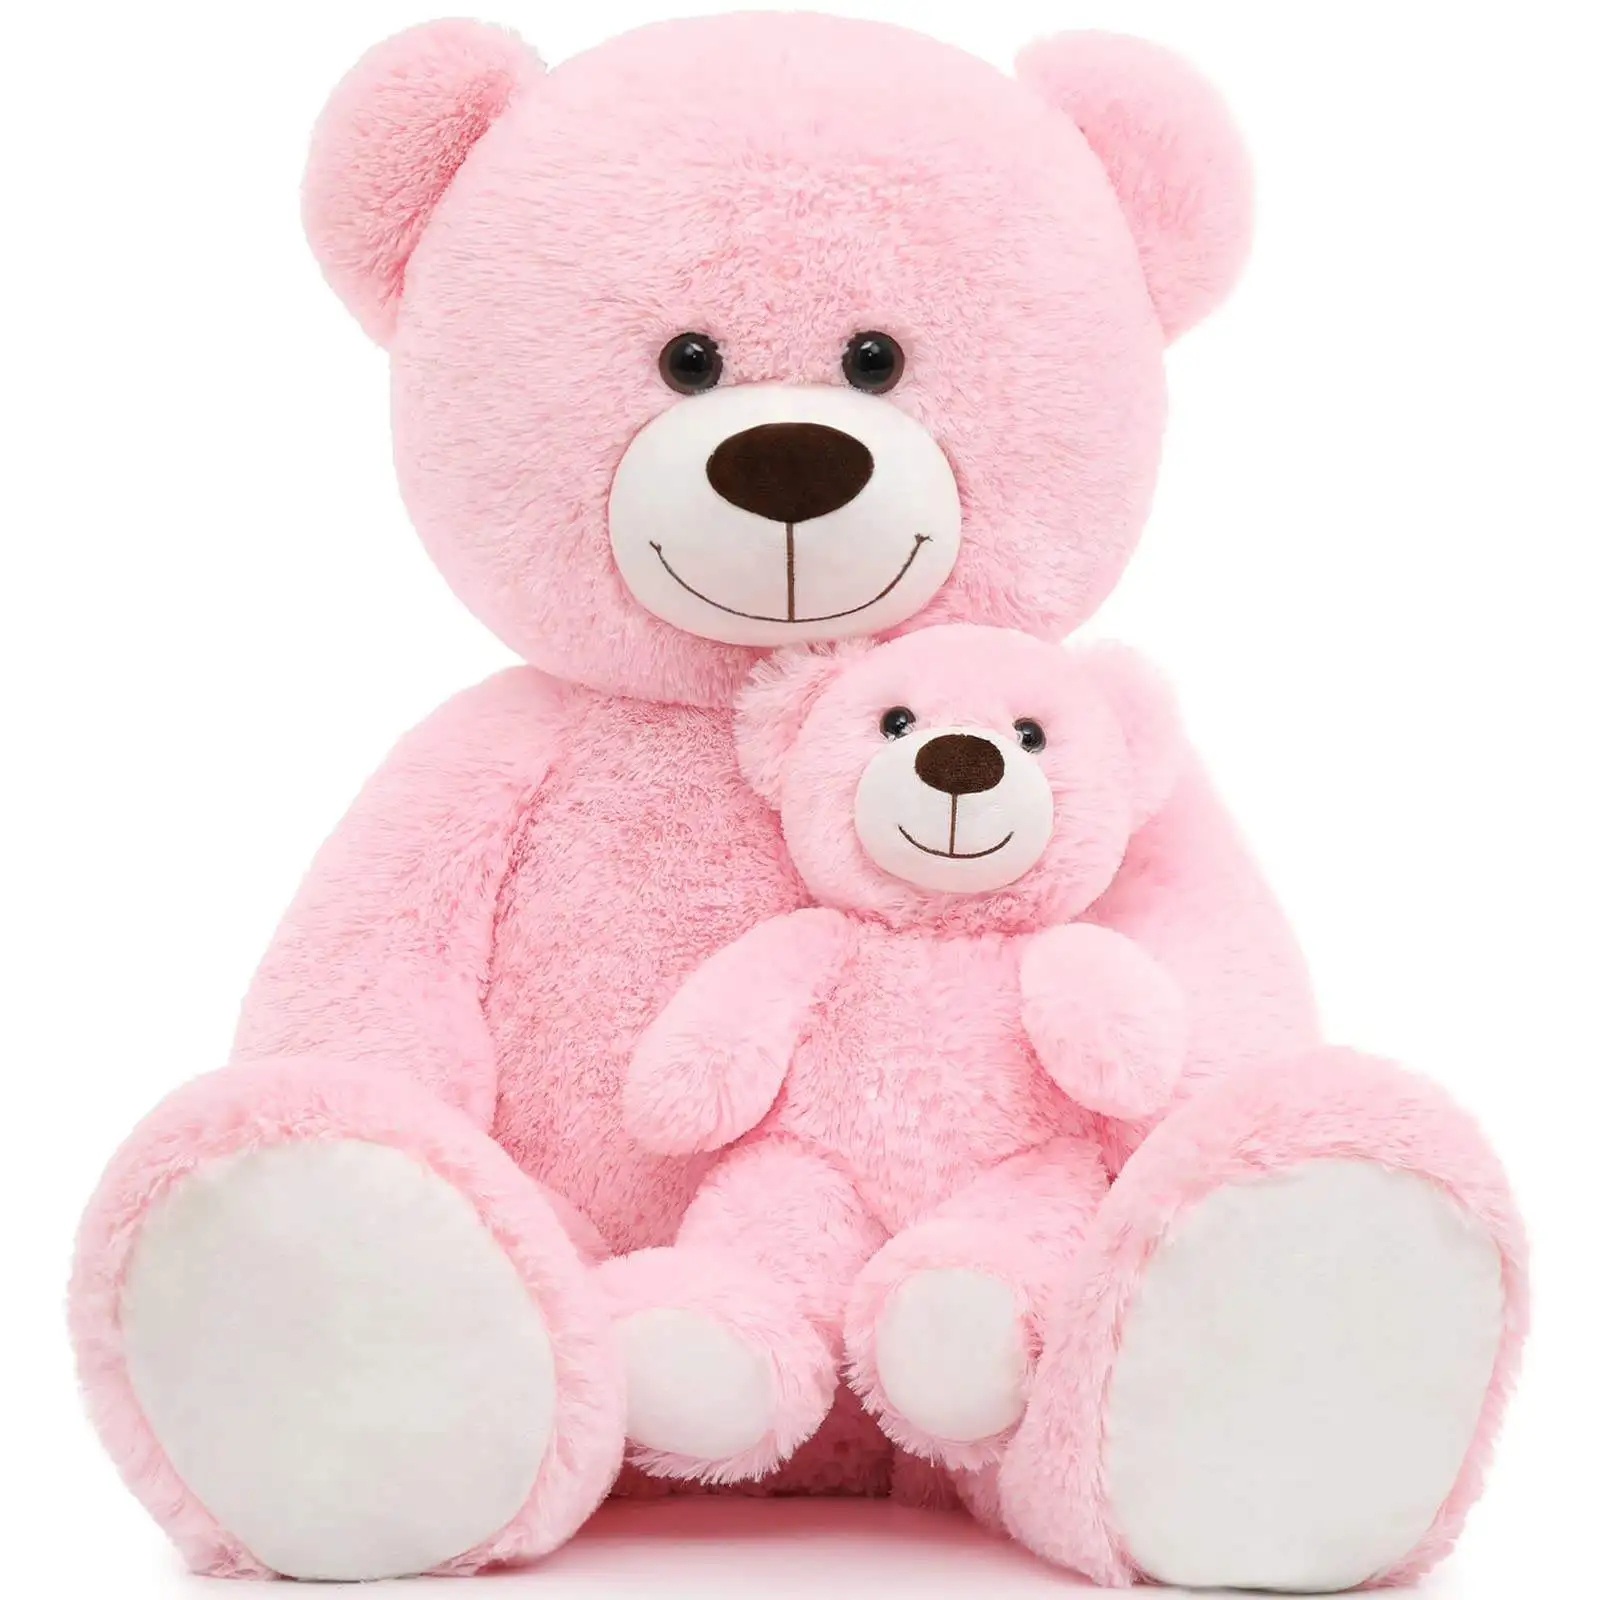 Giant Teddy Bear Plush Toy Soft Stuffed Animal Doll High Quality Kawaii Pillow Home Decor Toys For Children